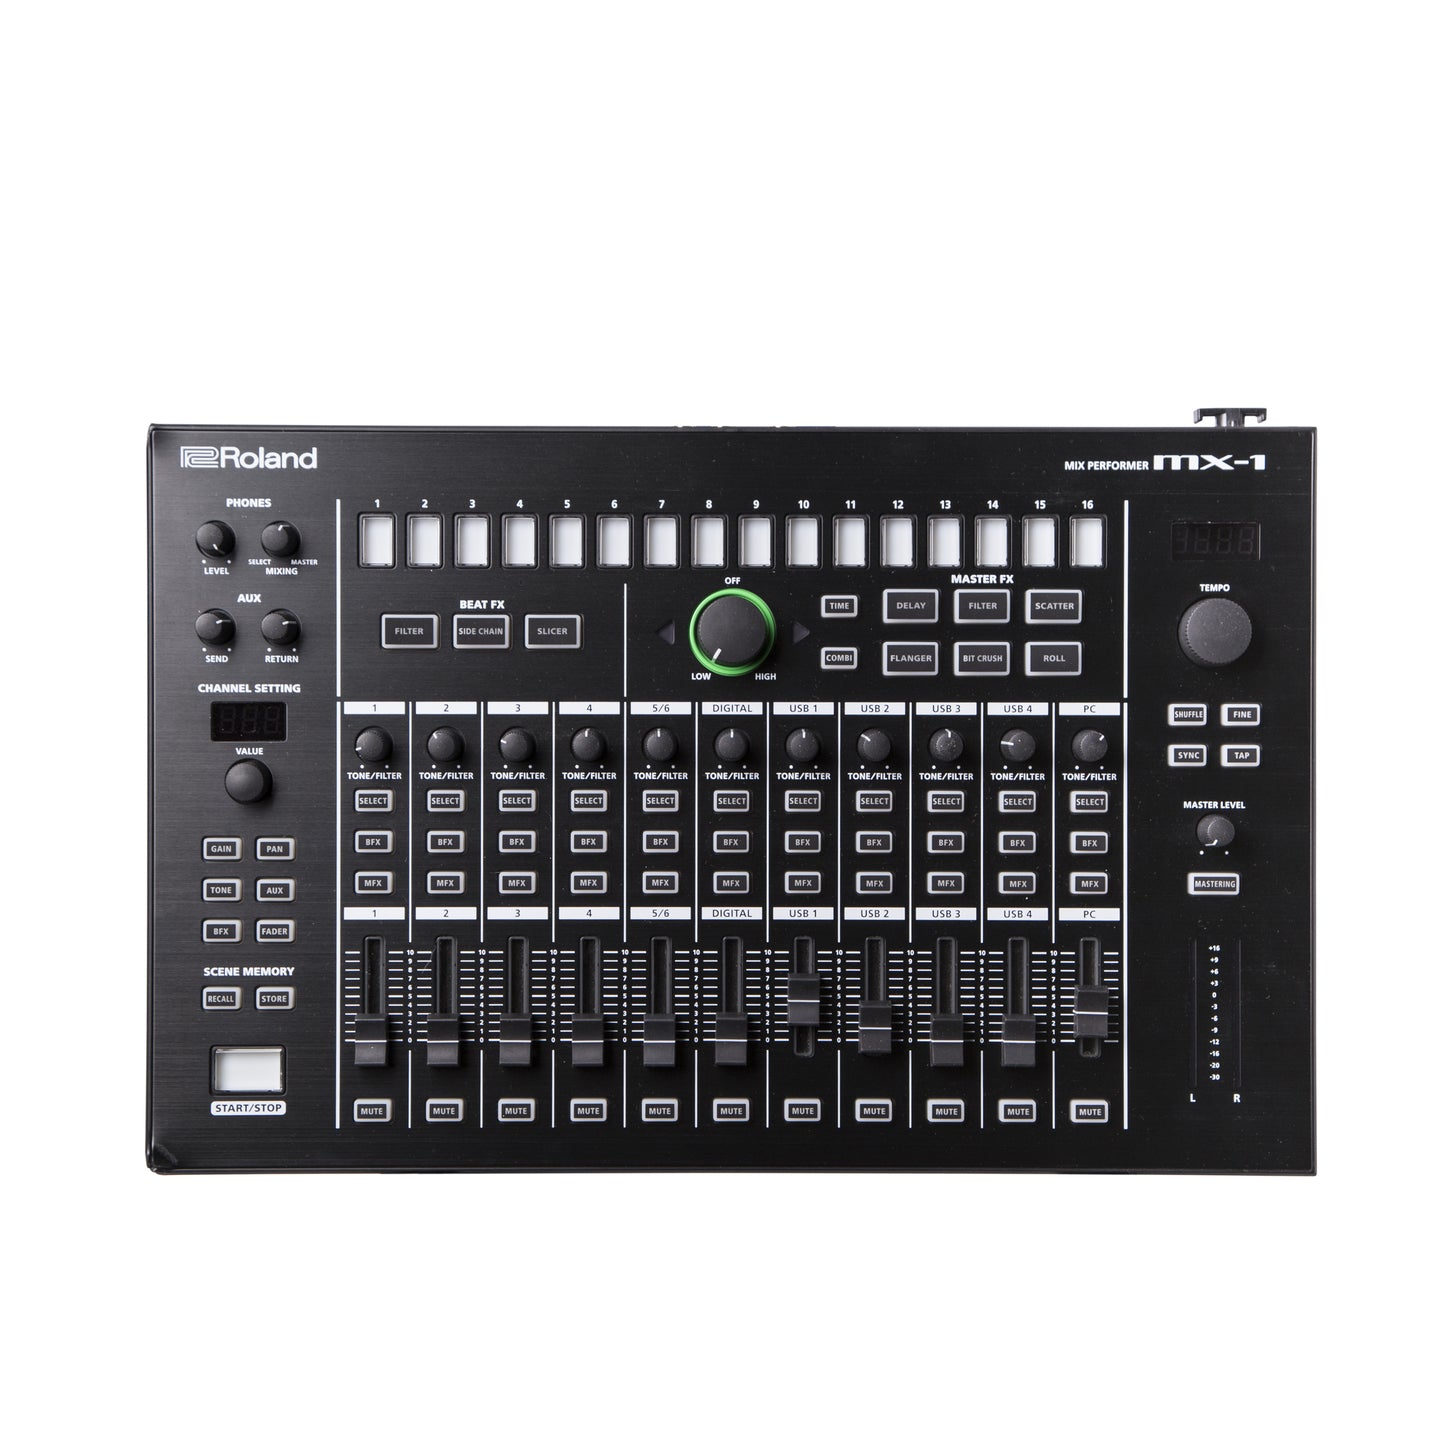 Roland AIRA MX-1 Mix Performer Control Surface